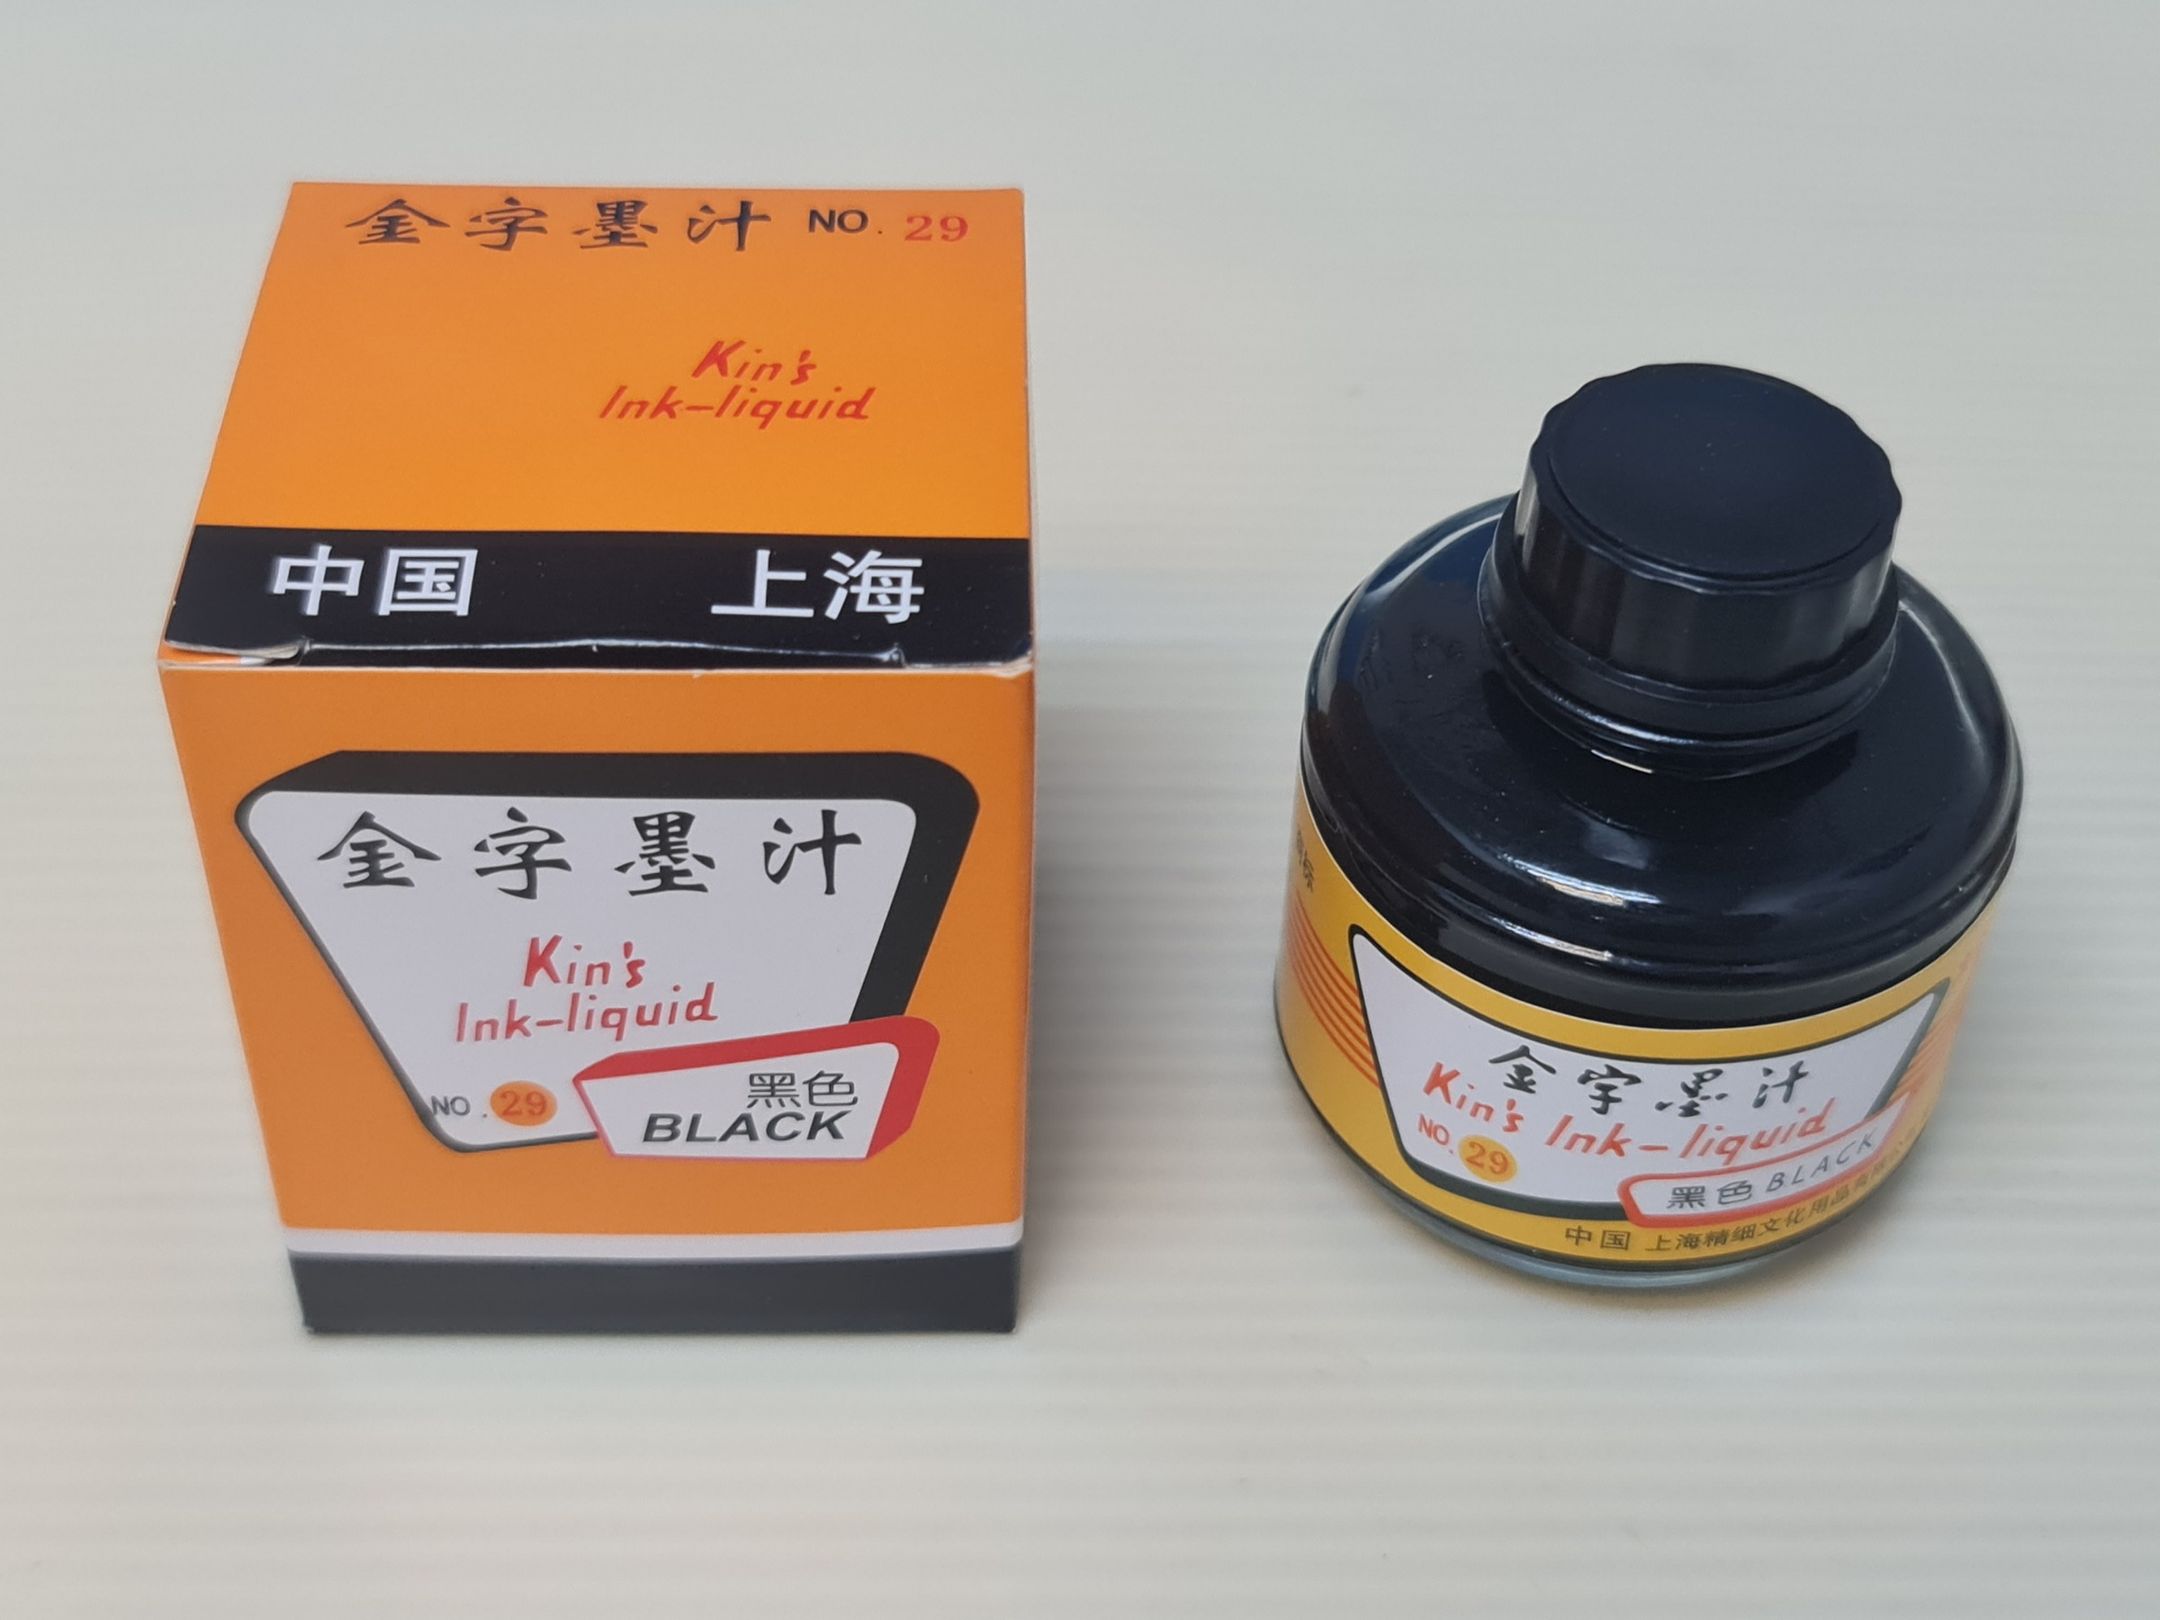 KIN'S CHINESE CALLIGRAPHY INK 金字墨汁 60G